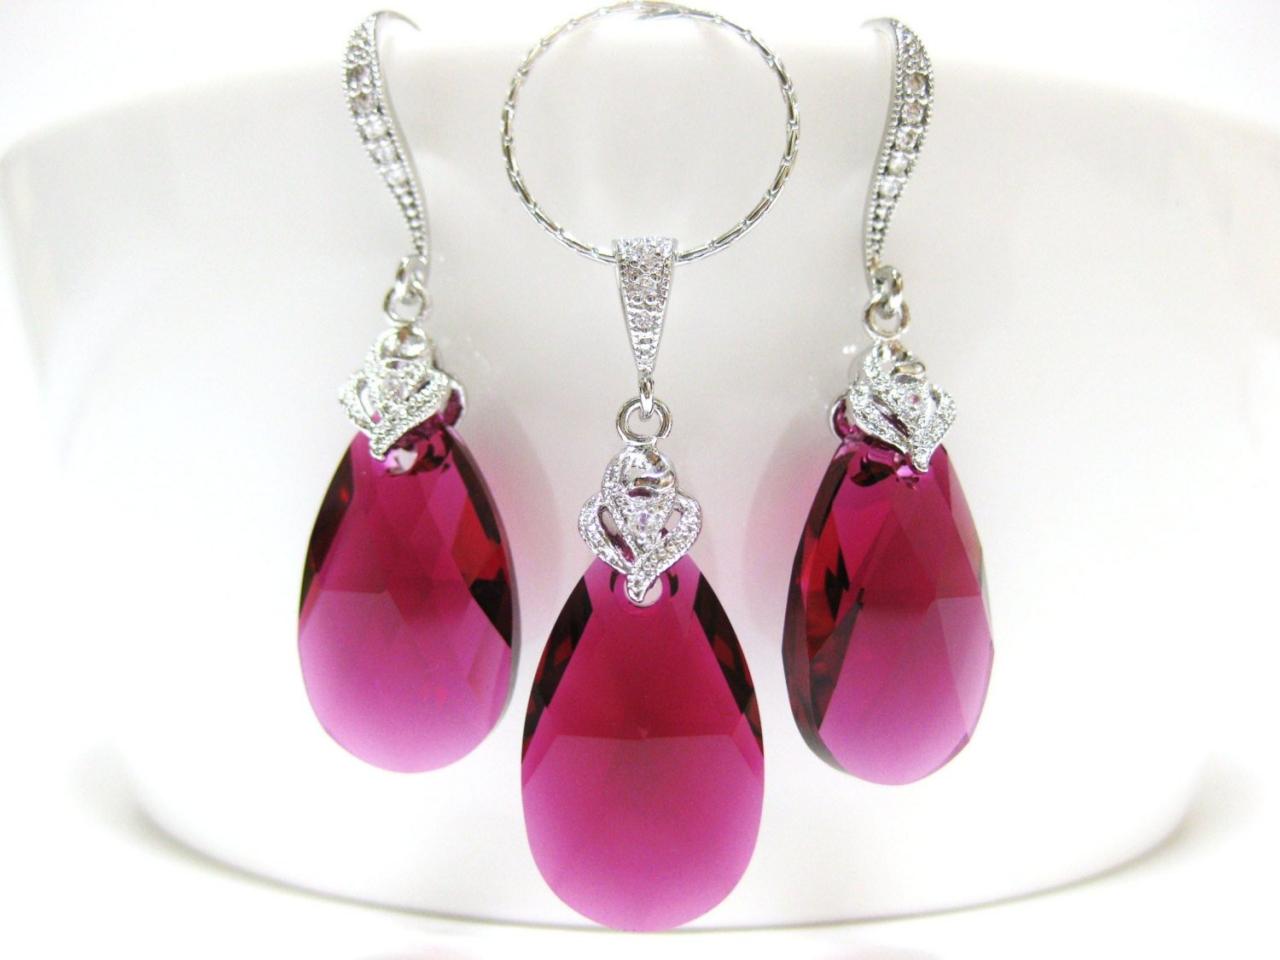 Ruby Fuchsia Teardrop Earrings & Necklace Gift Set Swarovski Pink Crystal Wedding Jewelry Bridal Pink Jewelry Bridesmaids Gift (ne005)